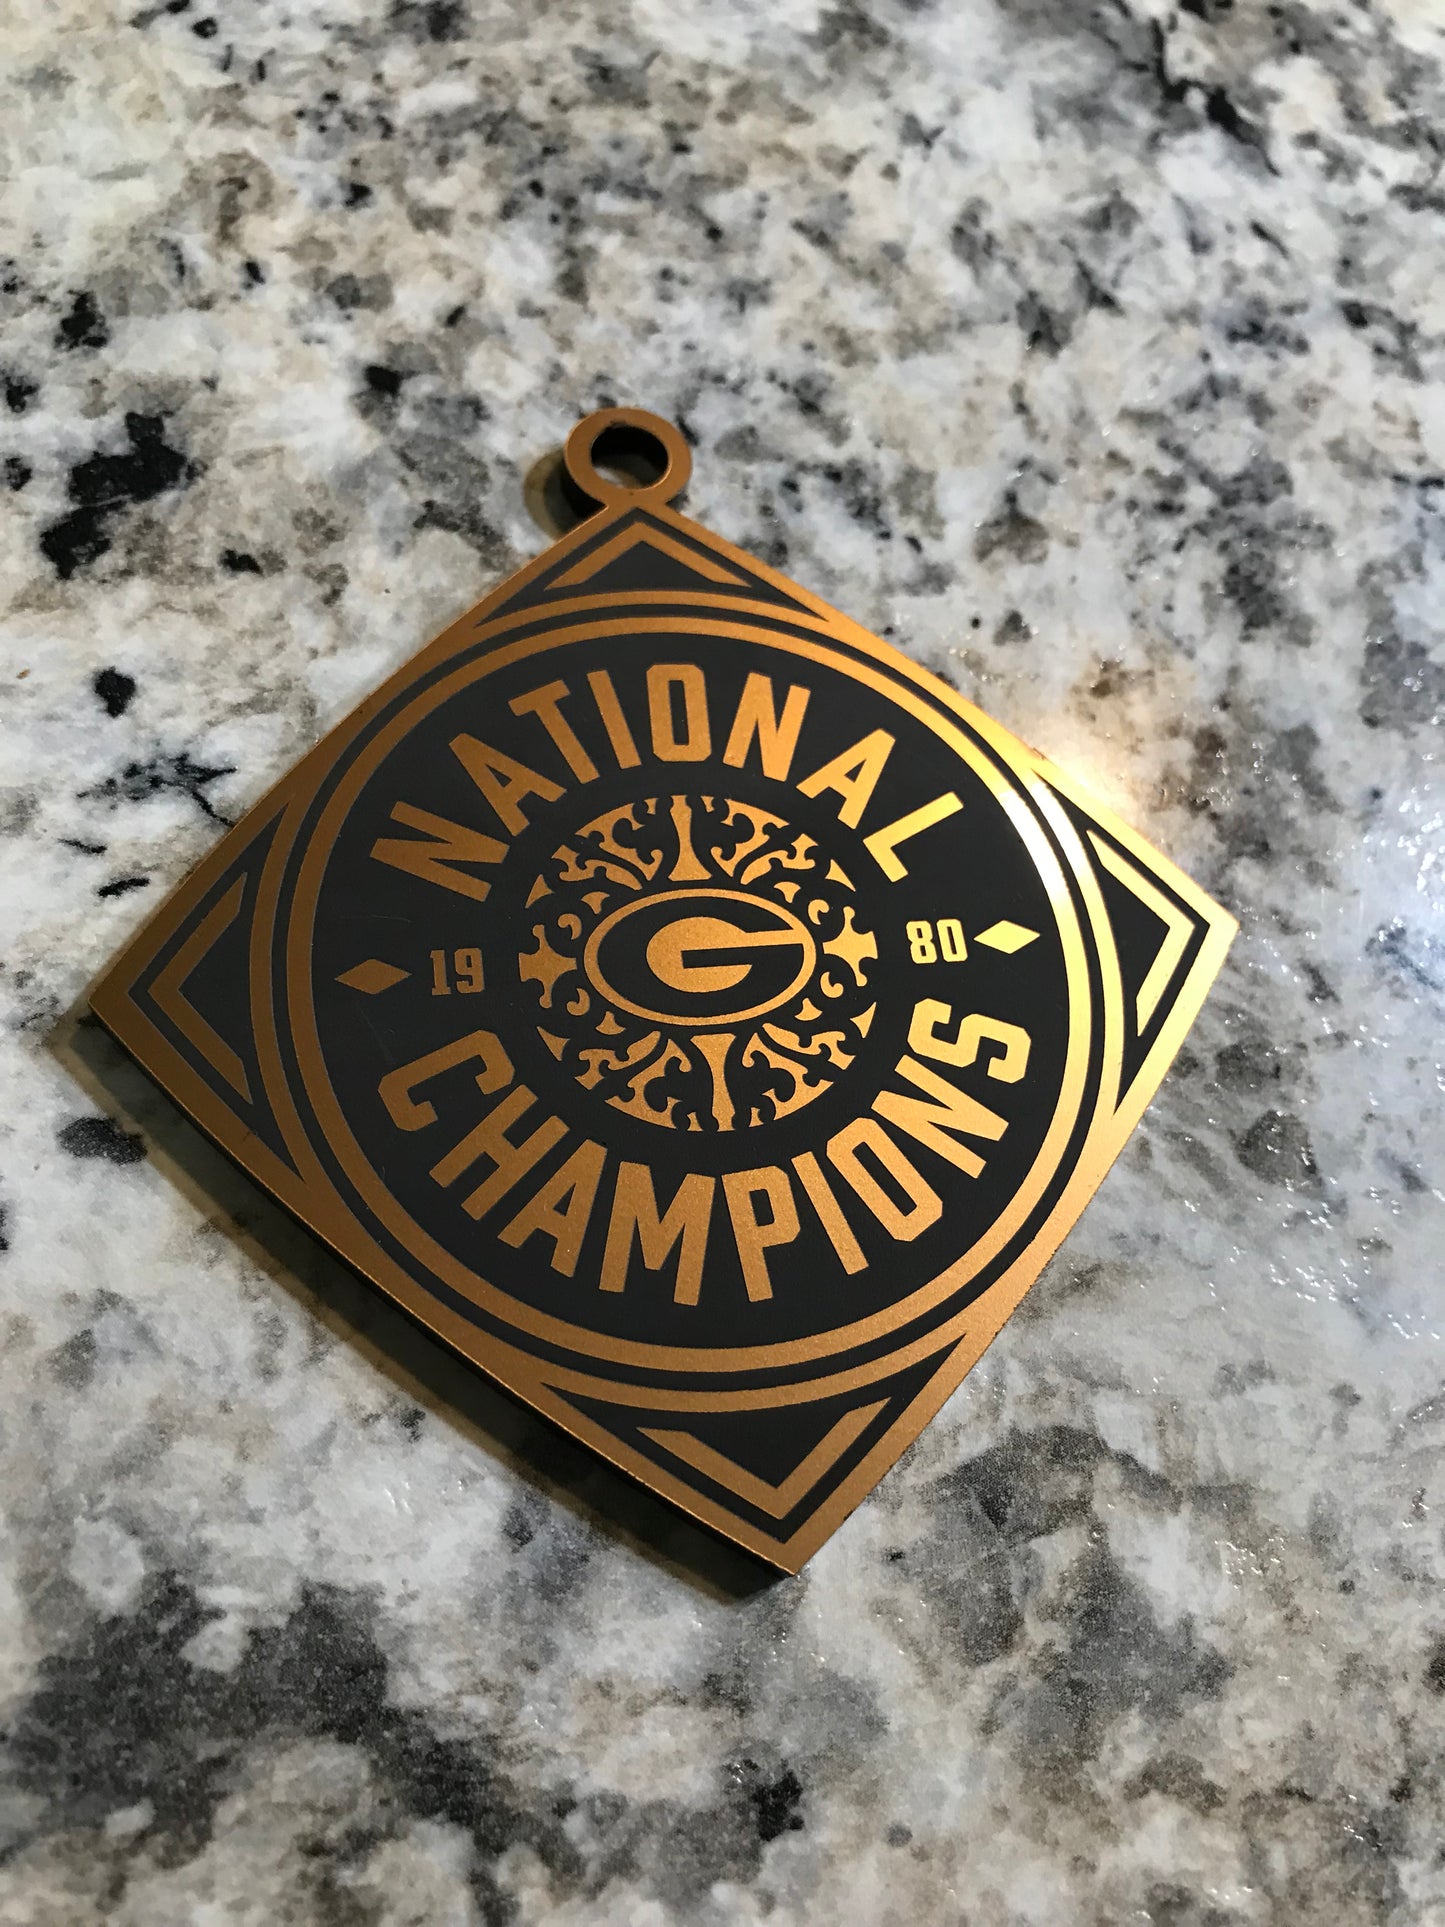 UGA 1980 National Champions Logo Ornament 3 1/4"x 3"